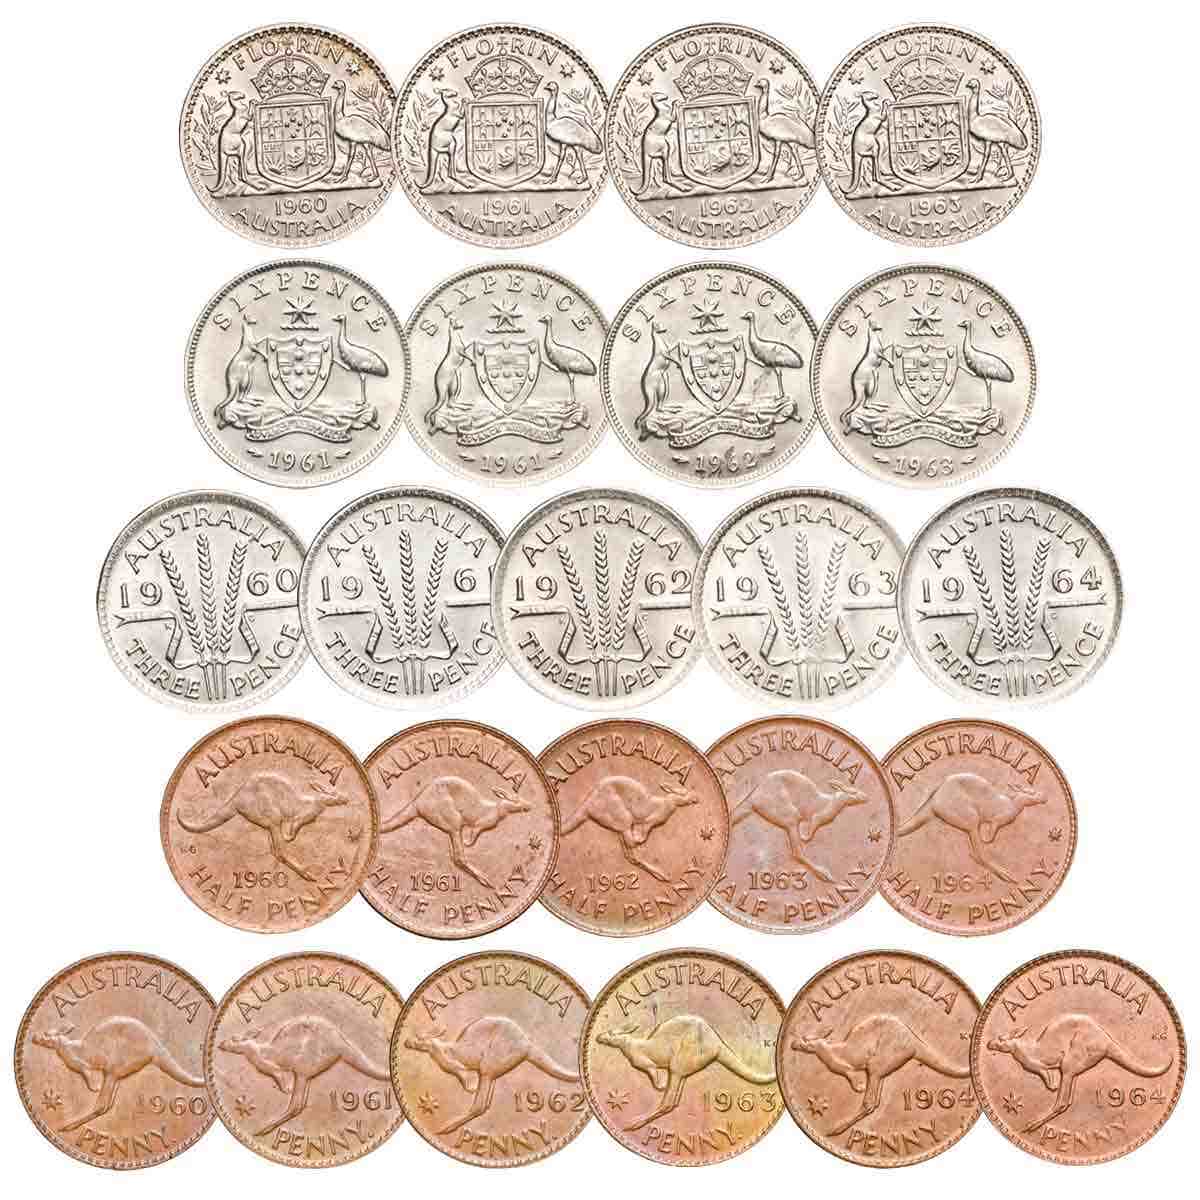 Australia Elizabeth II 1960-64 Complete Uncirculated 28-Coin Set